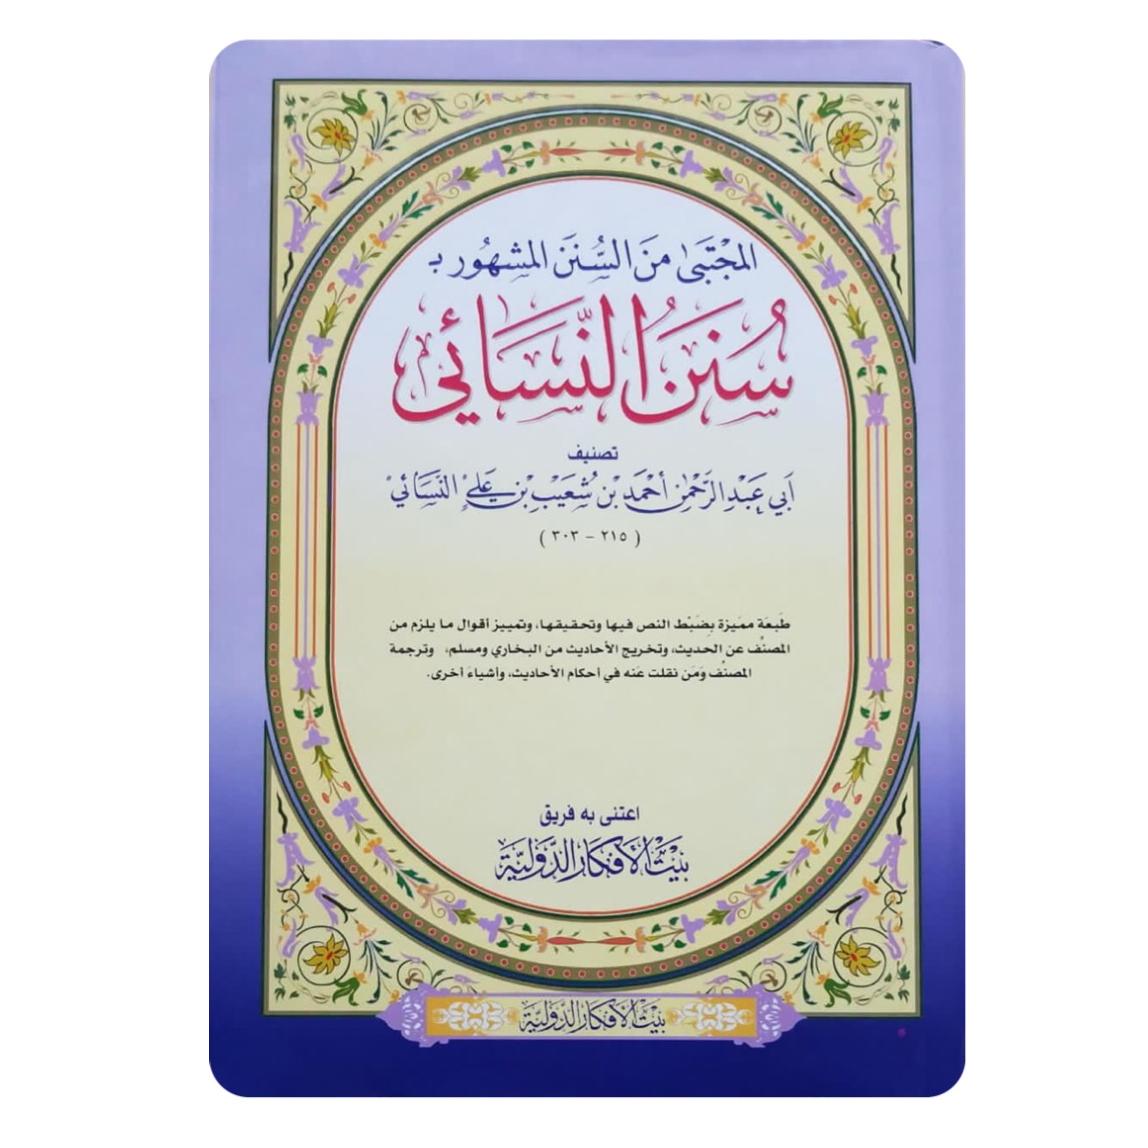 Sunan al-Nasa’i, the classification of Abu Abd al-Rahman Ahmad bin Shuaib bin Ali al-Nasa’i